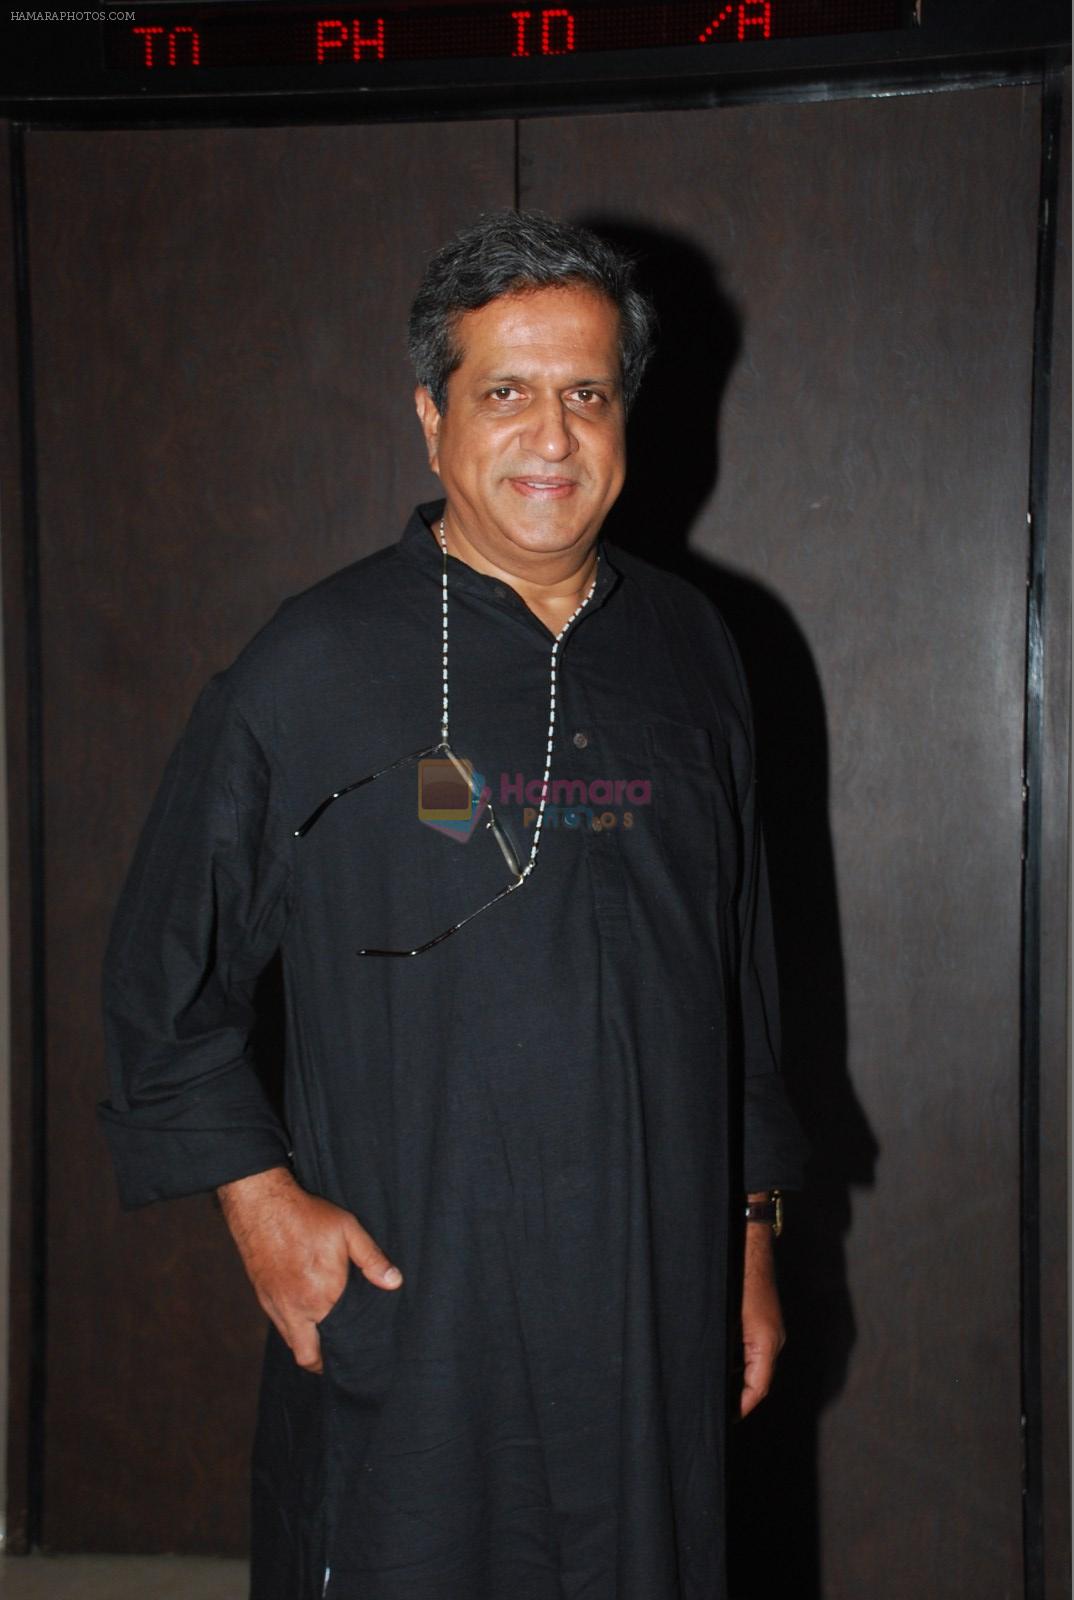 Darshan Jariwala at Chisty foundation event in Malad, Mumbai on 20th Feb 2015